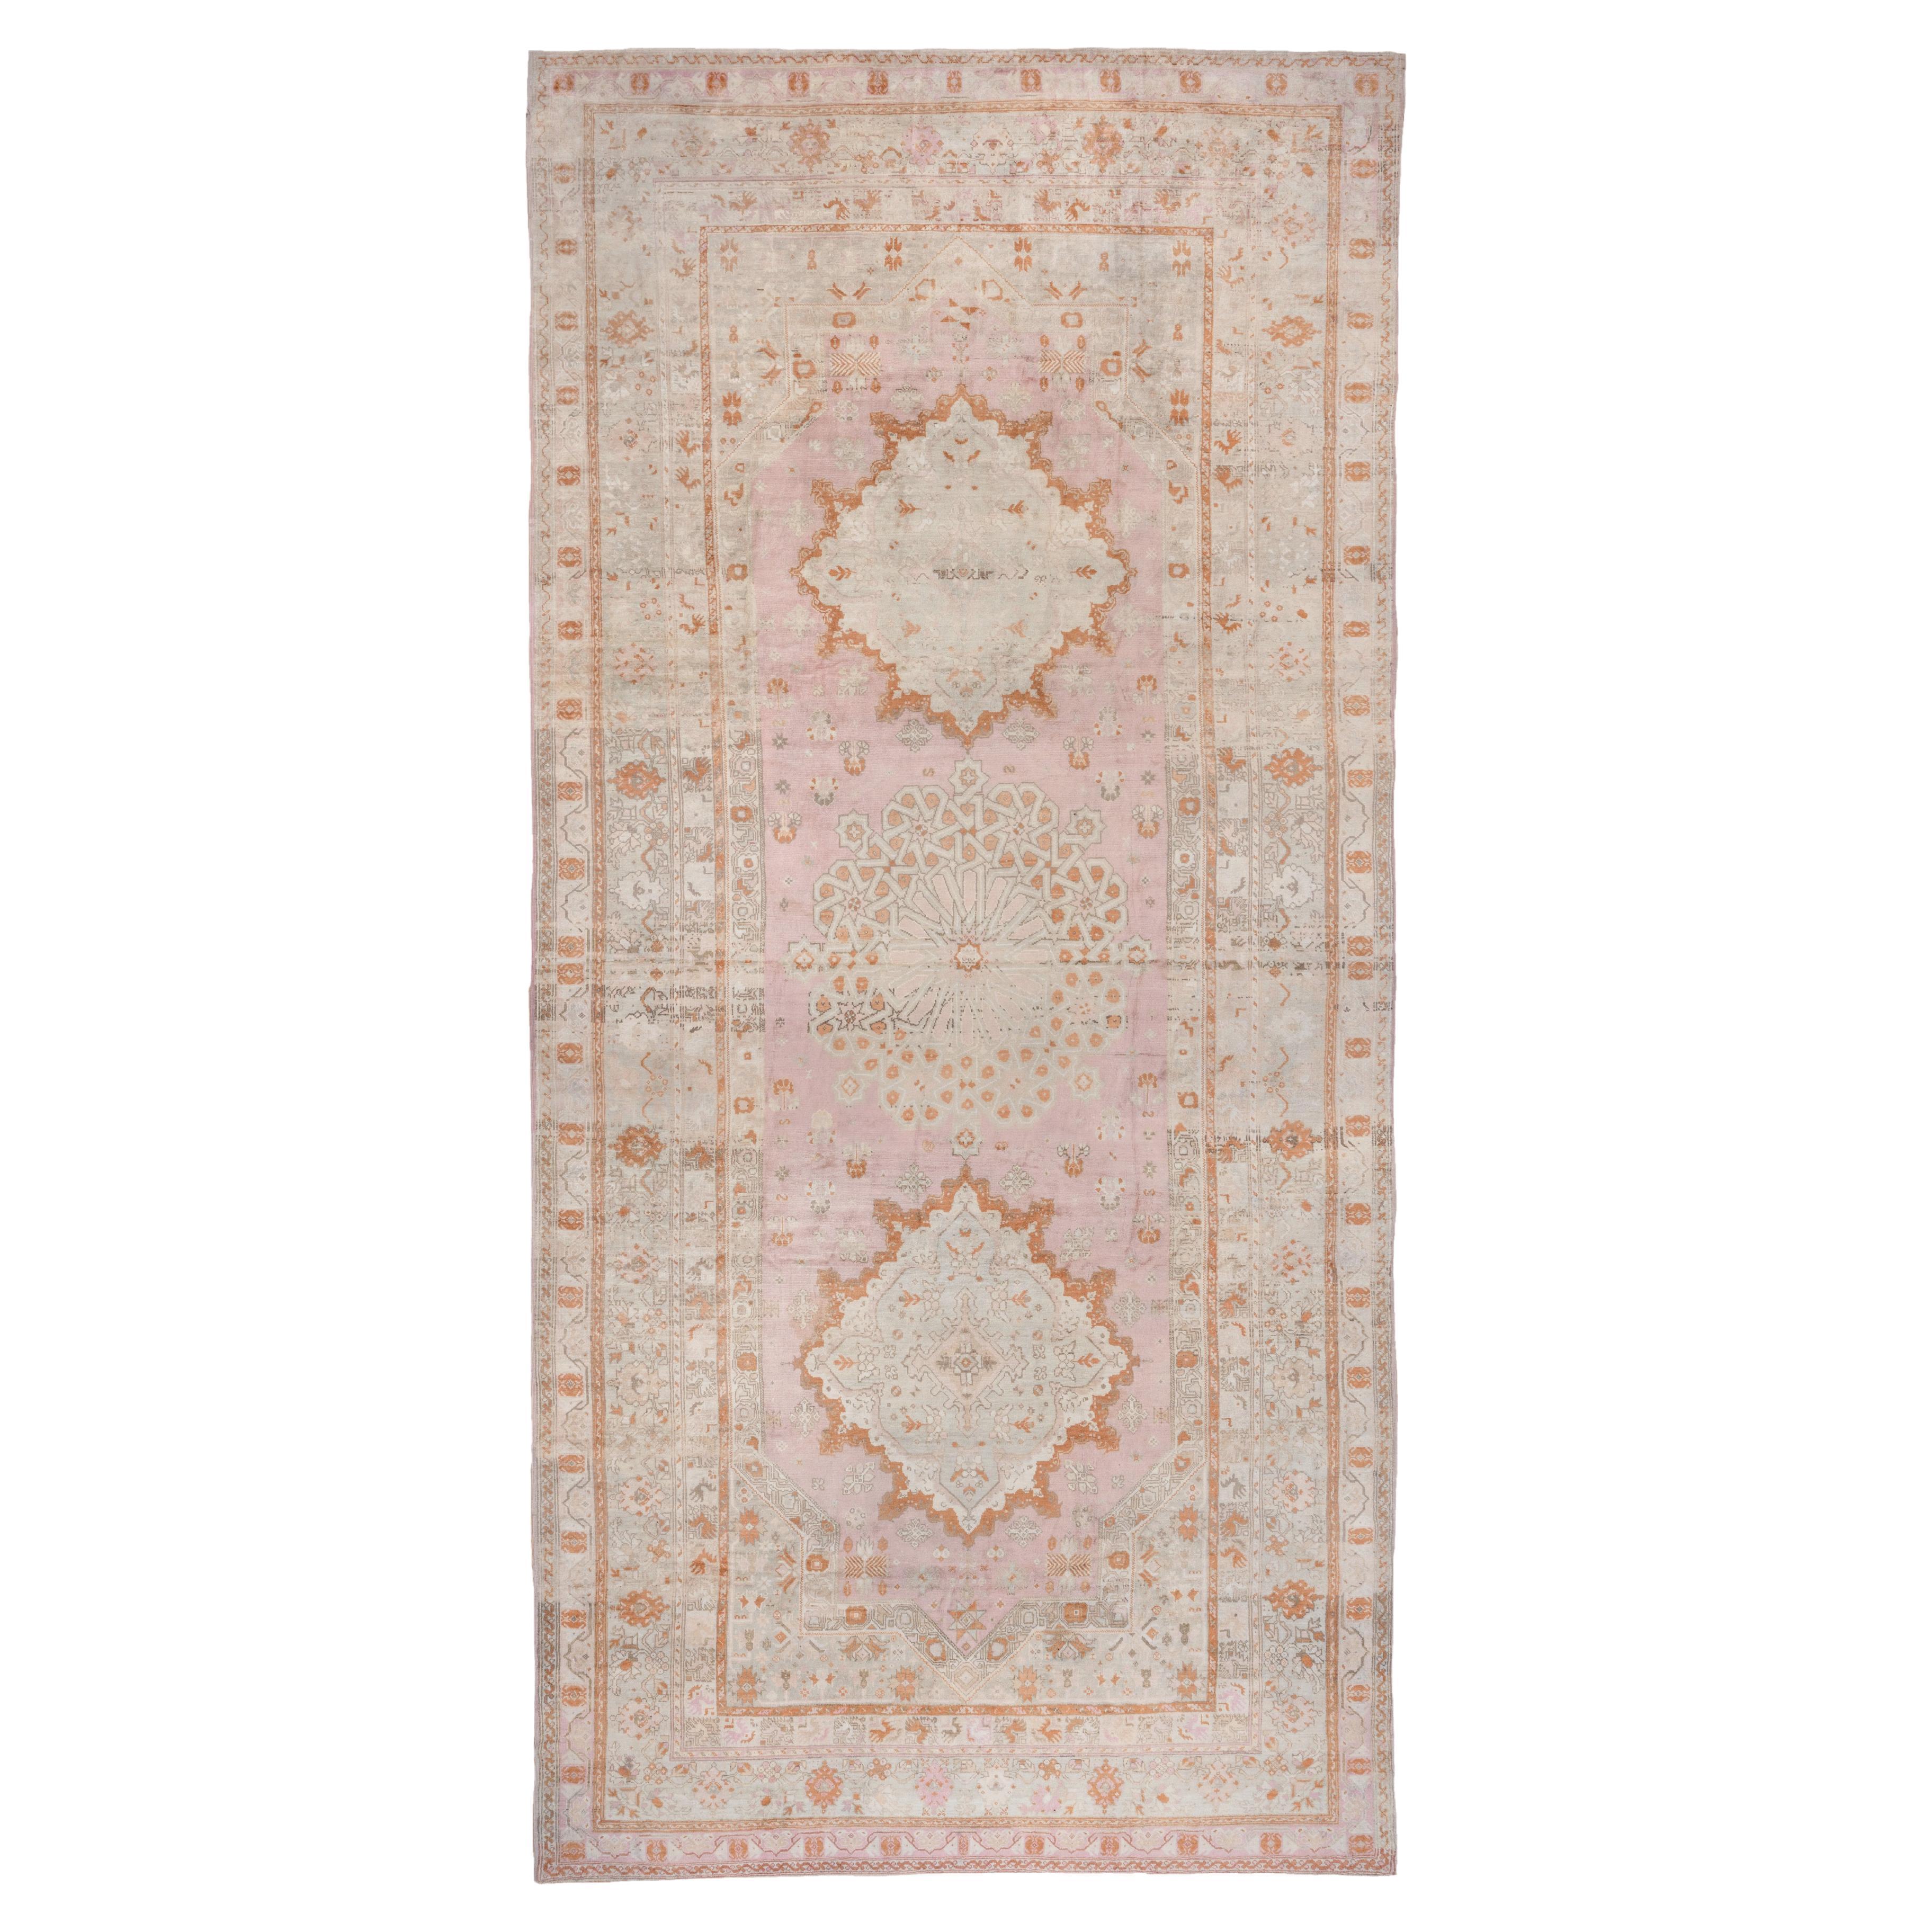 Massive Antique Turkish Oushak Mansion Carpet, Pink, Ivory & Orange Tones